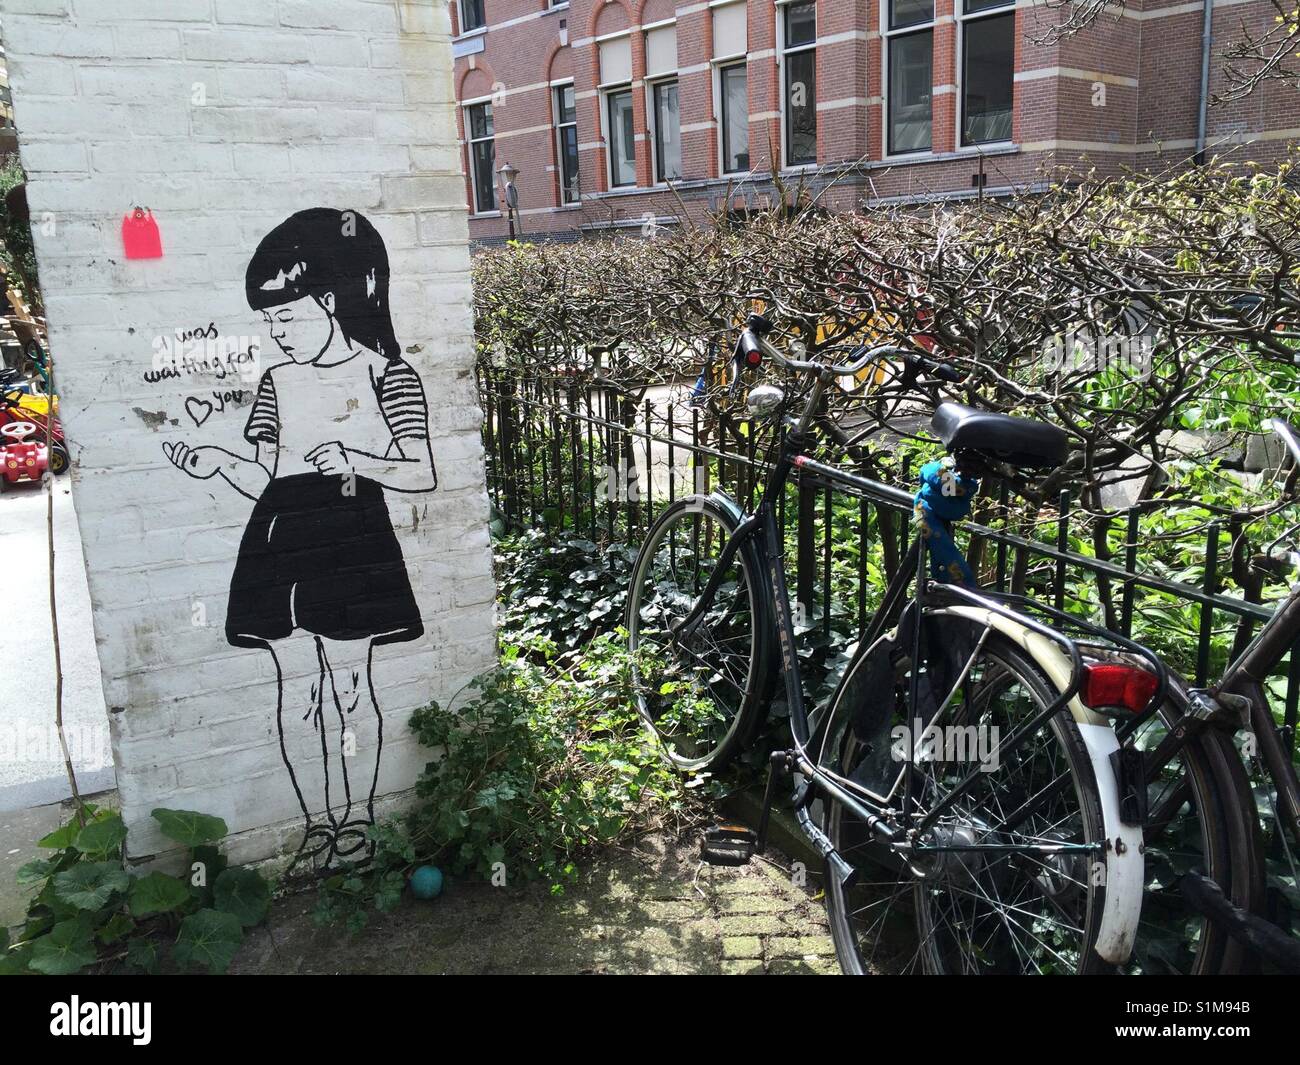 Amsterdam Graffiti in strada mostra ragazza, accanto a una bici in giardino, Strassenszene mit Vorgarten und Fahrrad, Radlstadt Foto Stock